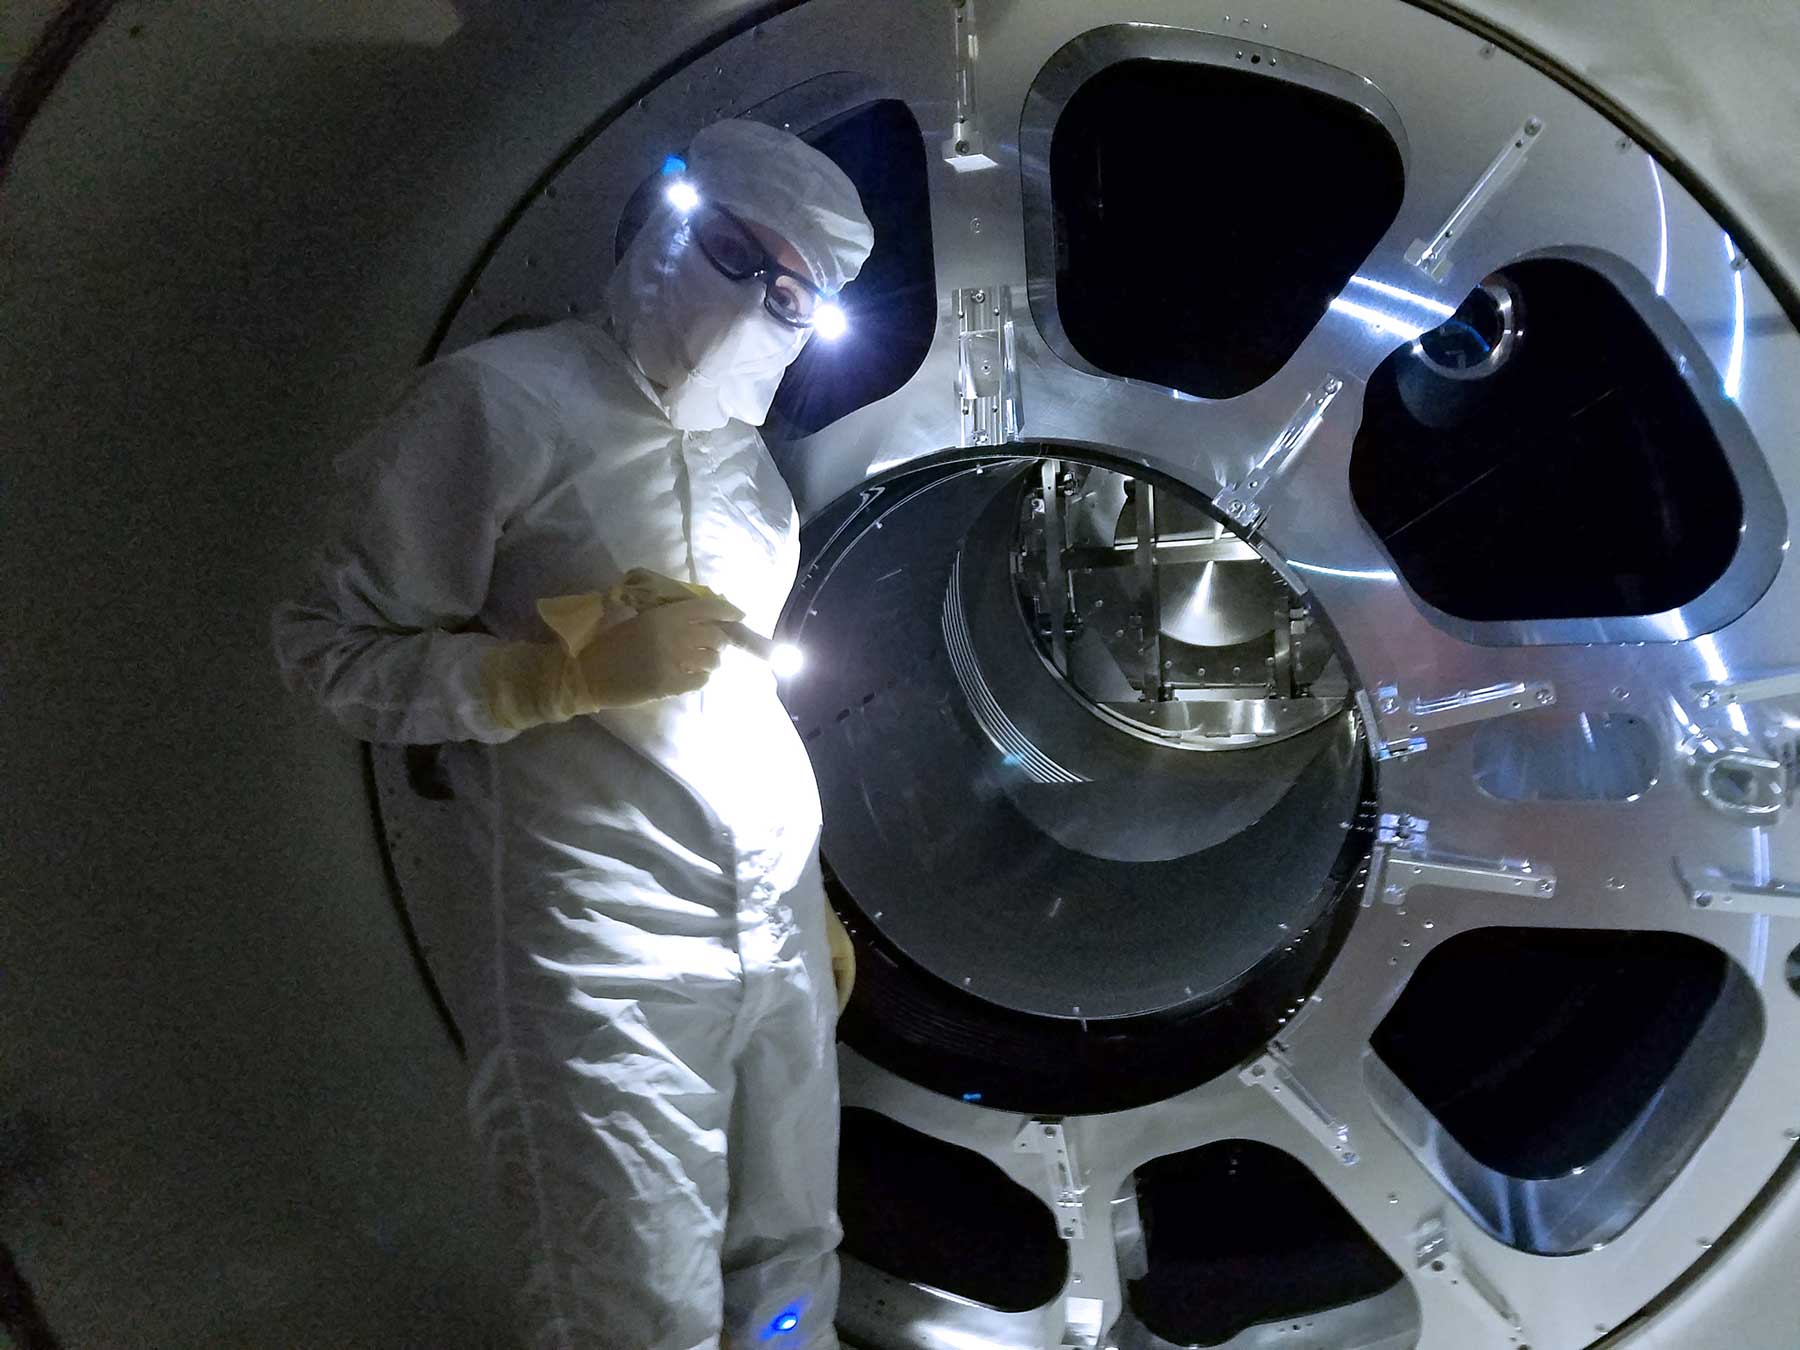 LIGO team member Alena Ananyeva is seen at LIGO Livingston Observatory installing new baffles on part of the LIGO instrument that controls stray light. These upgrades were made in preparation for Advanced LIGO's third observing run. Image credit: LIGO/Caltech/MIT/Matt Heintze